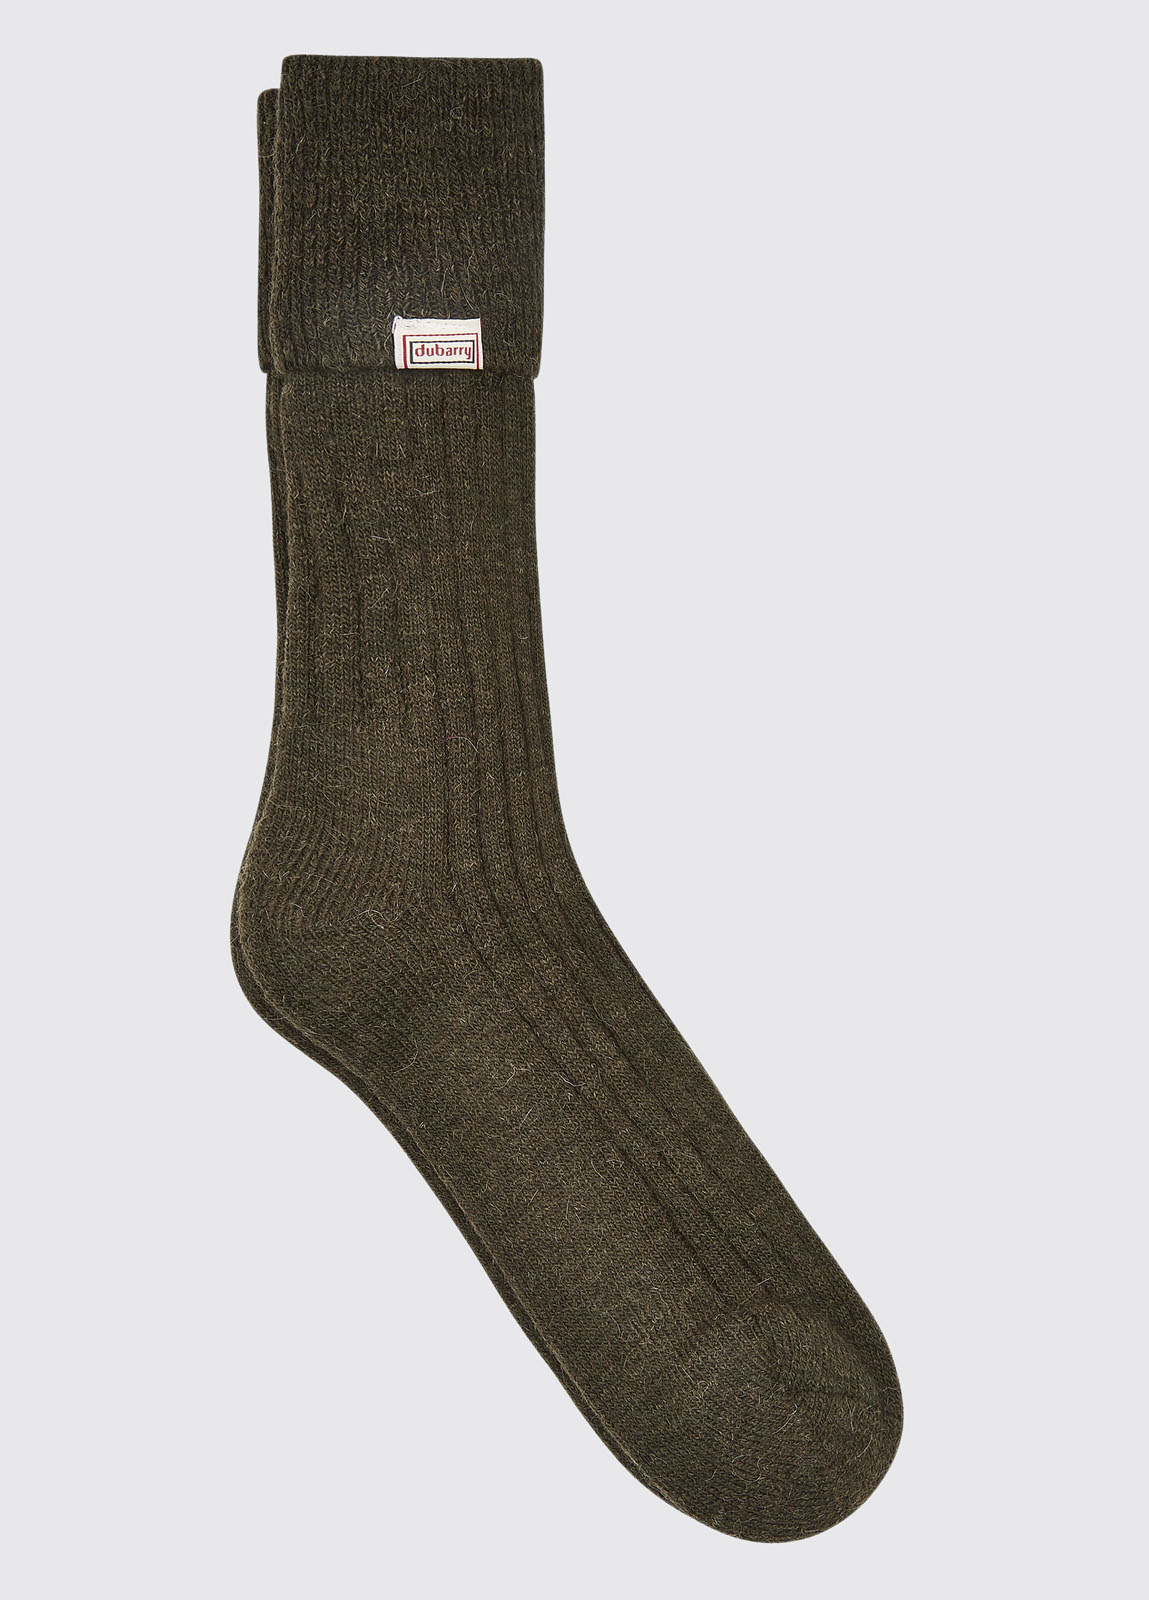 Holycross Alpaca Socks - Olive